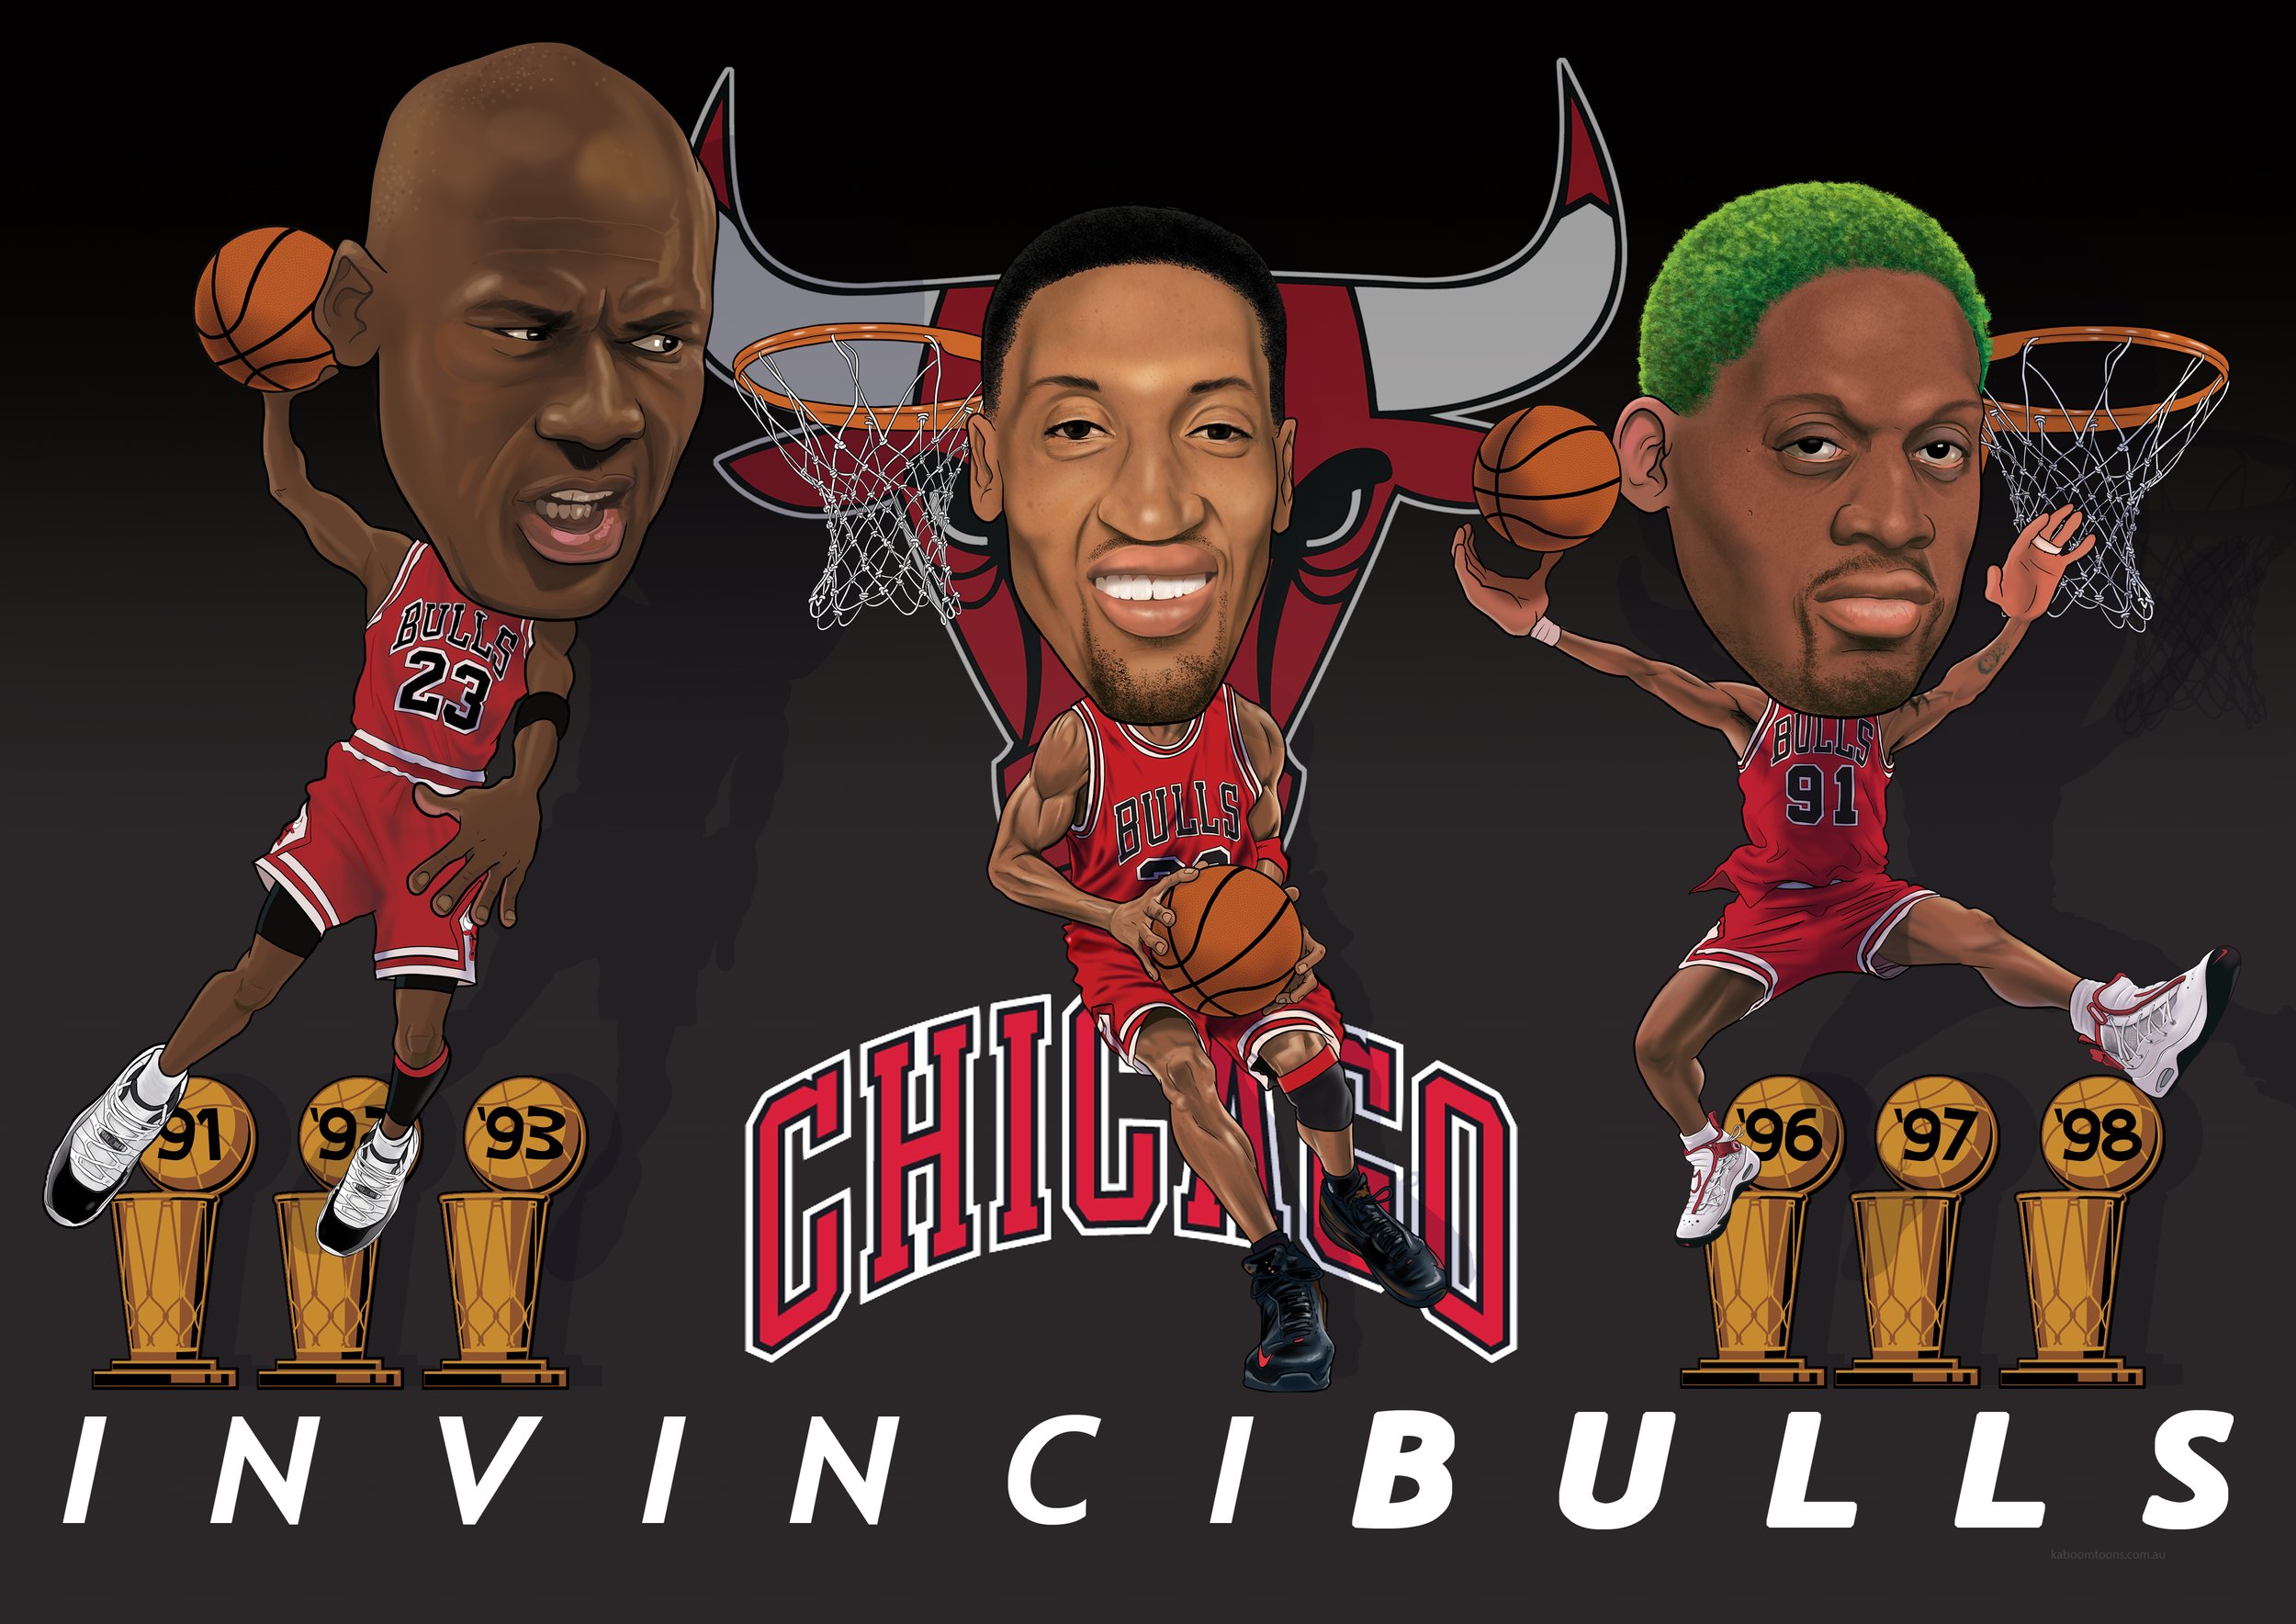 NBA Toons - Illustrations